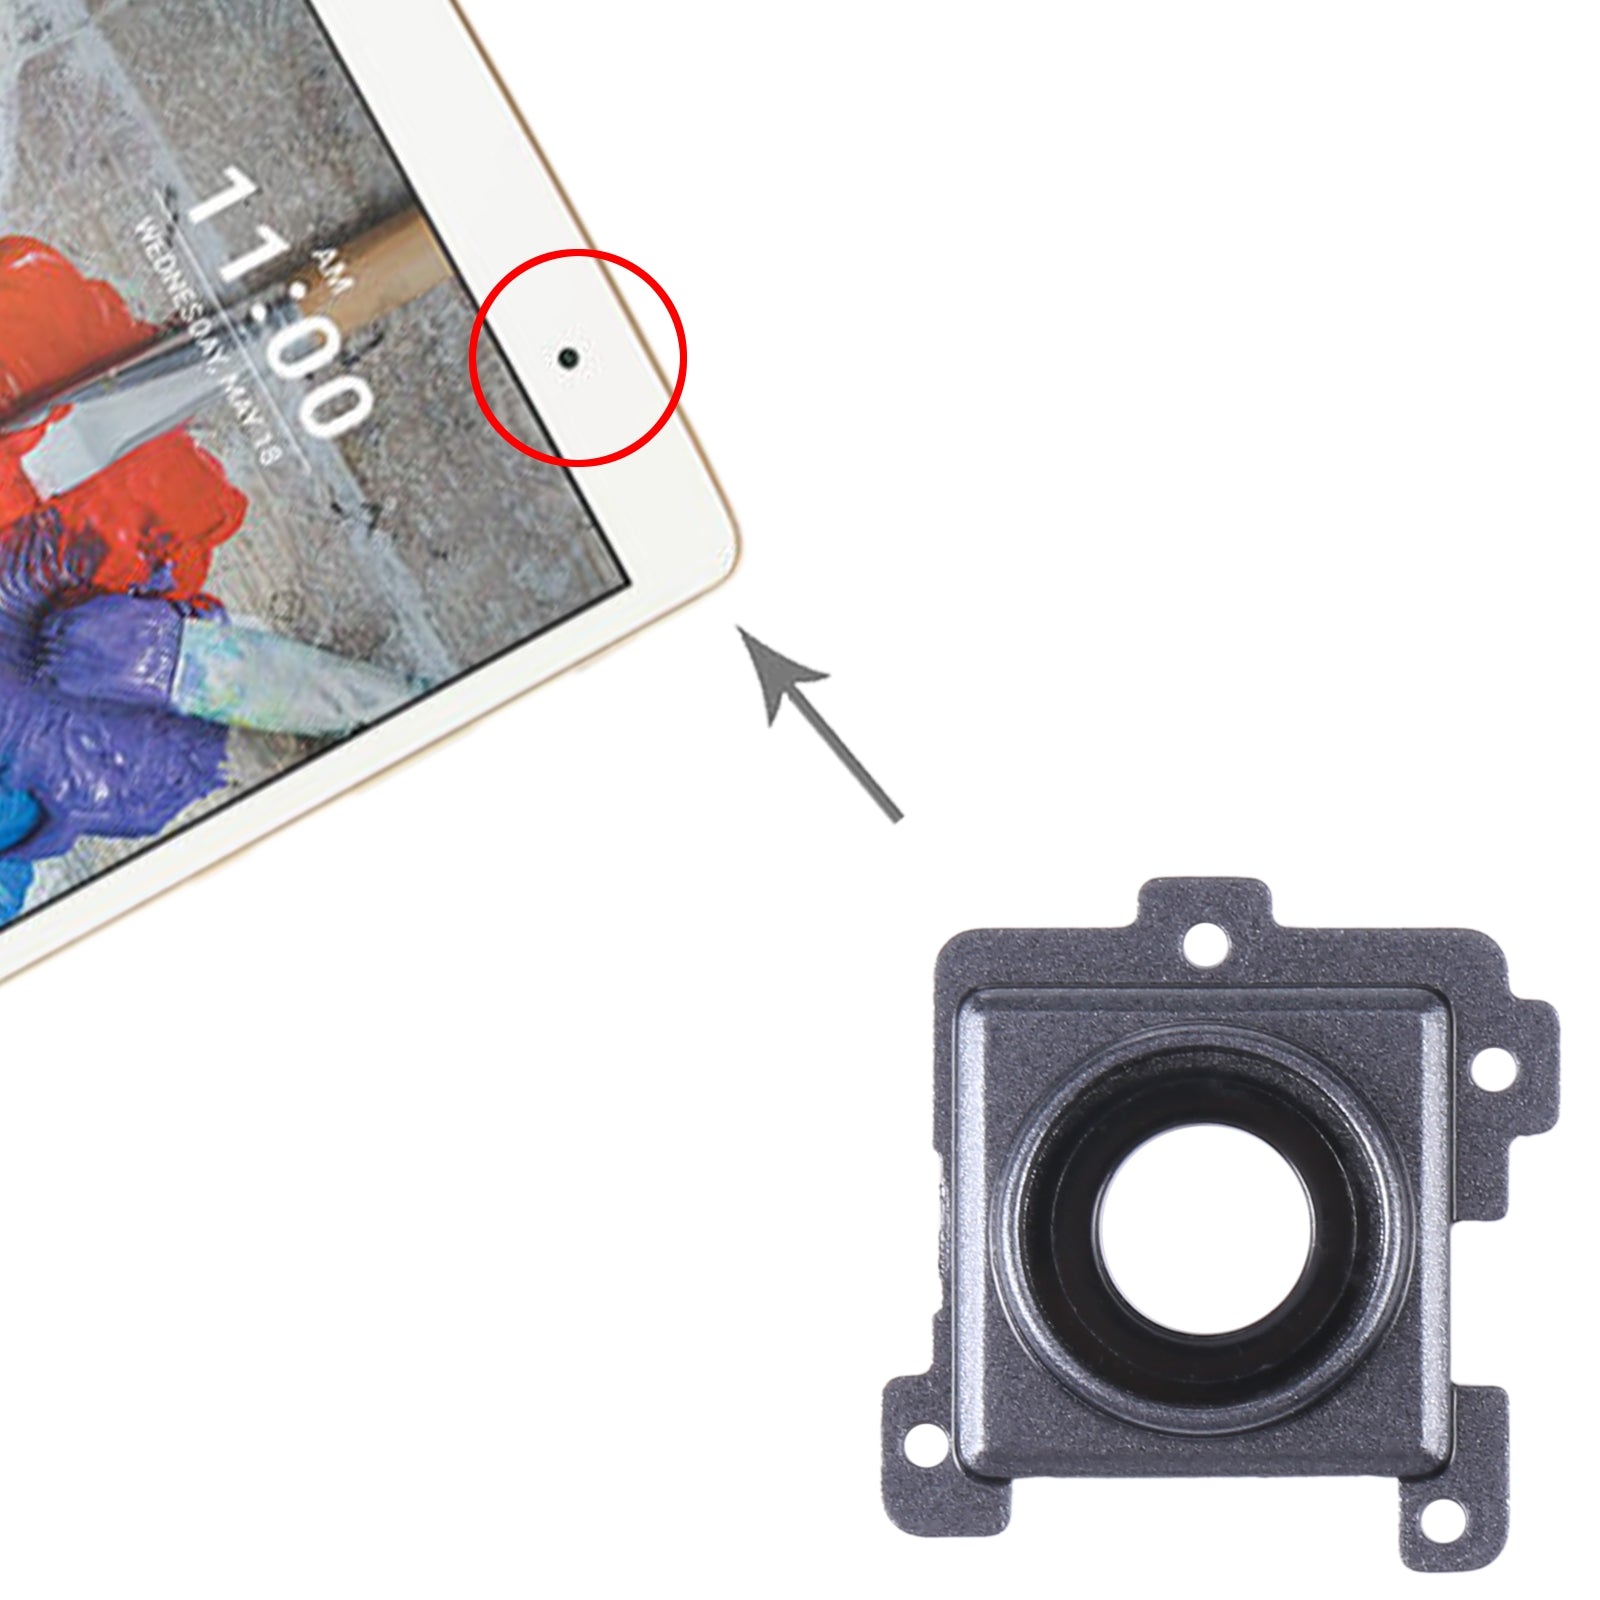 Rear Camera Lens Cover LG G Pad X 8.0 V520